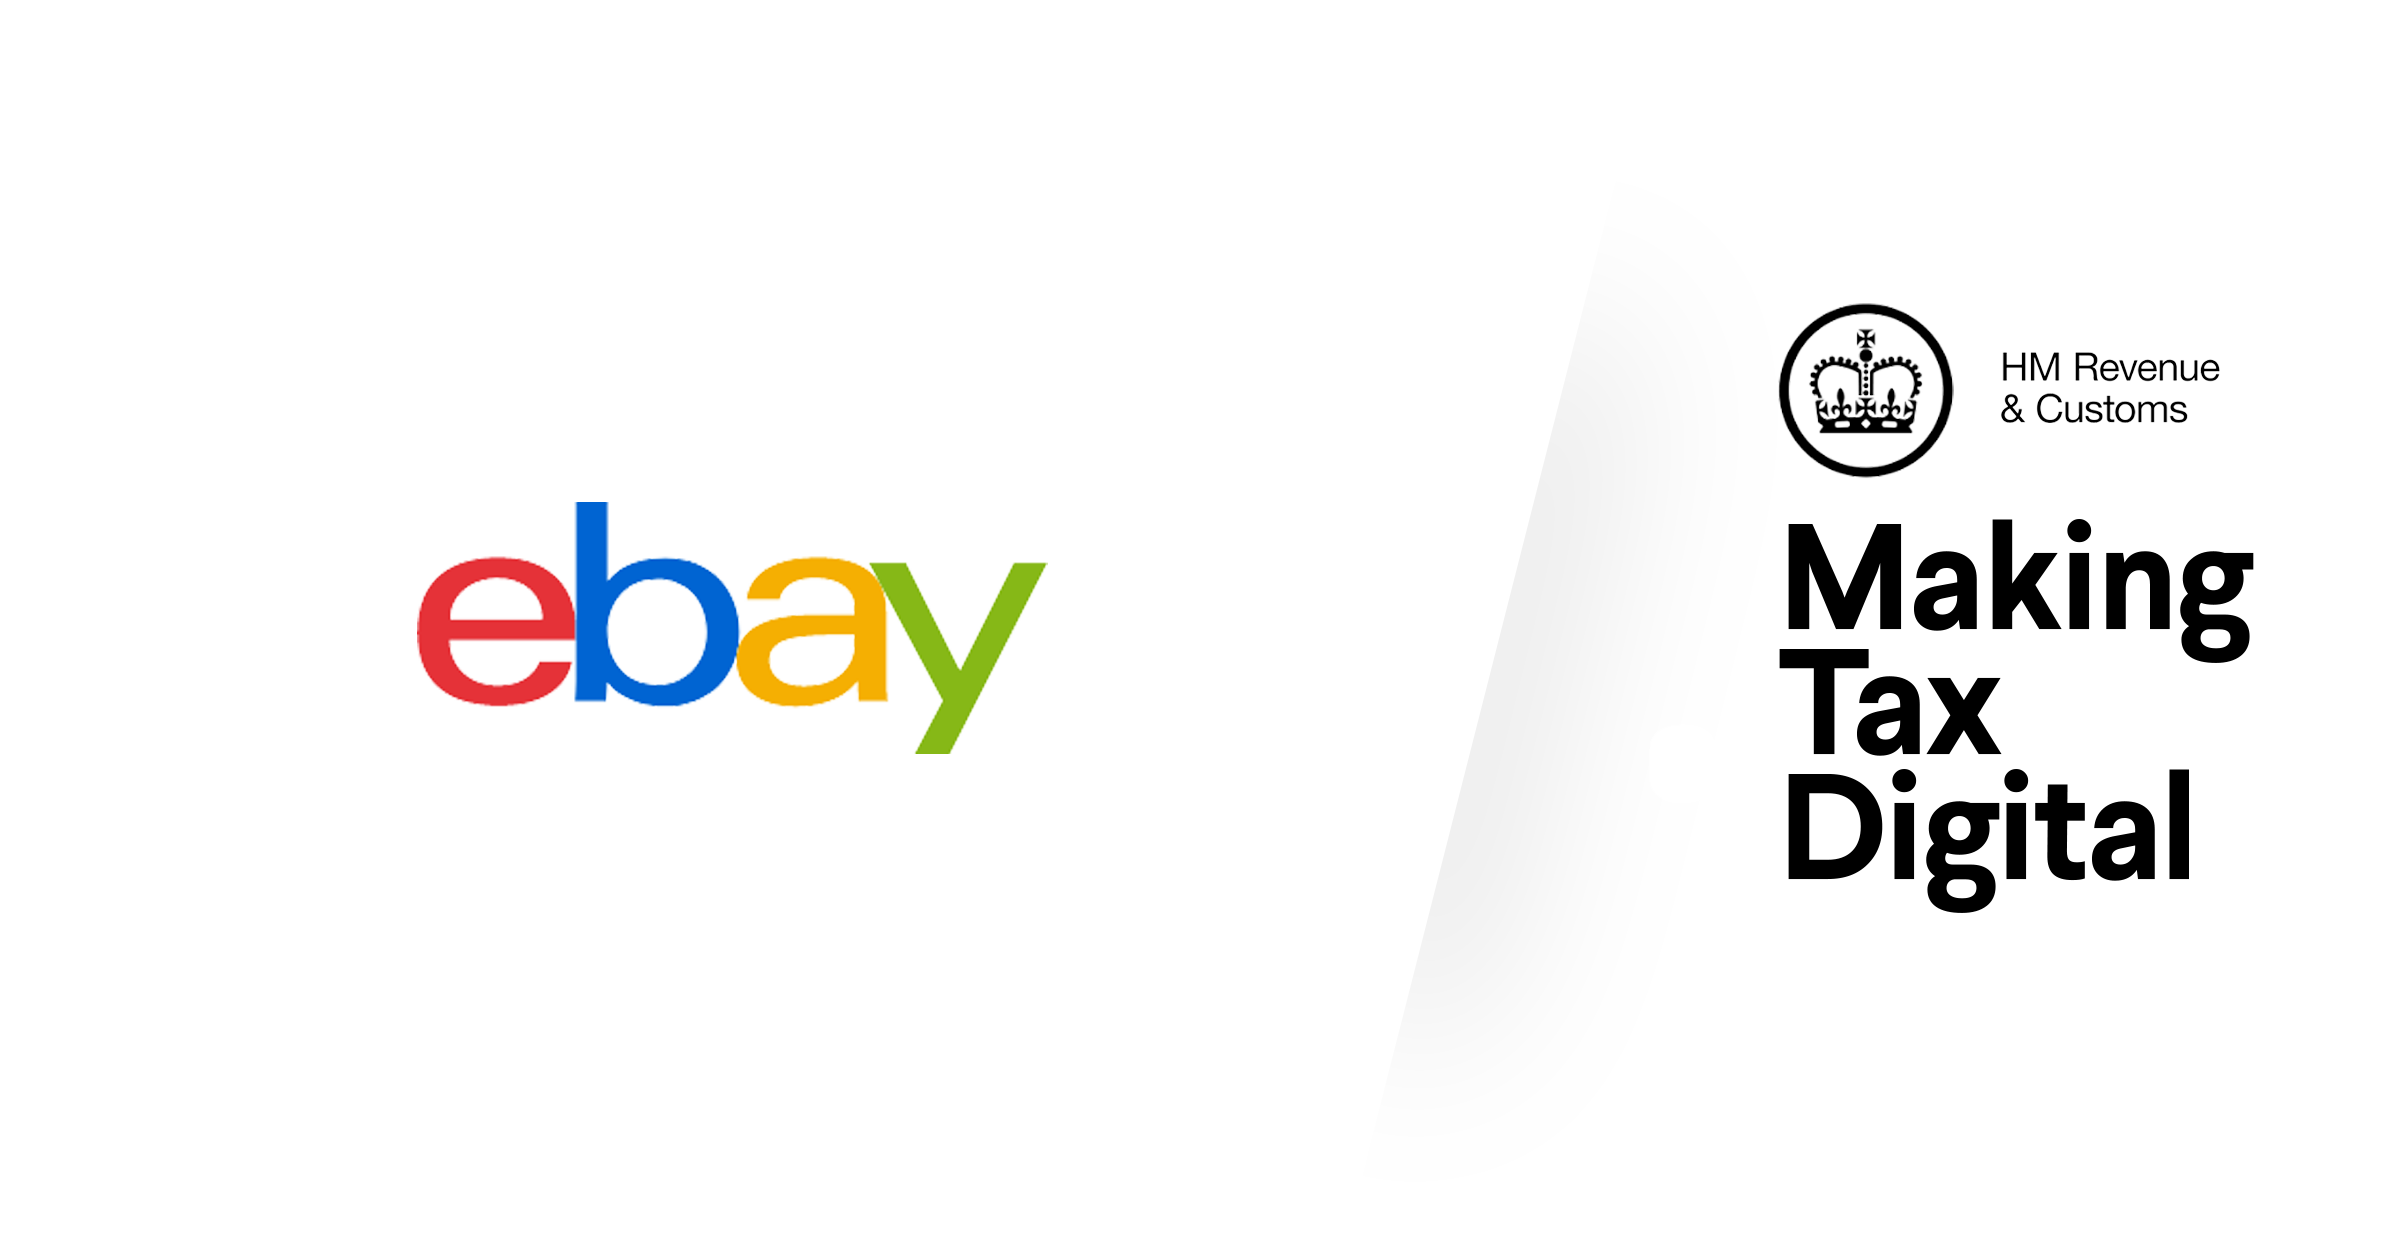 Make Tax Digital for eBay Sellers